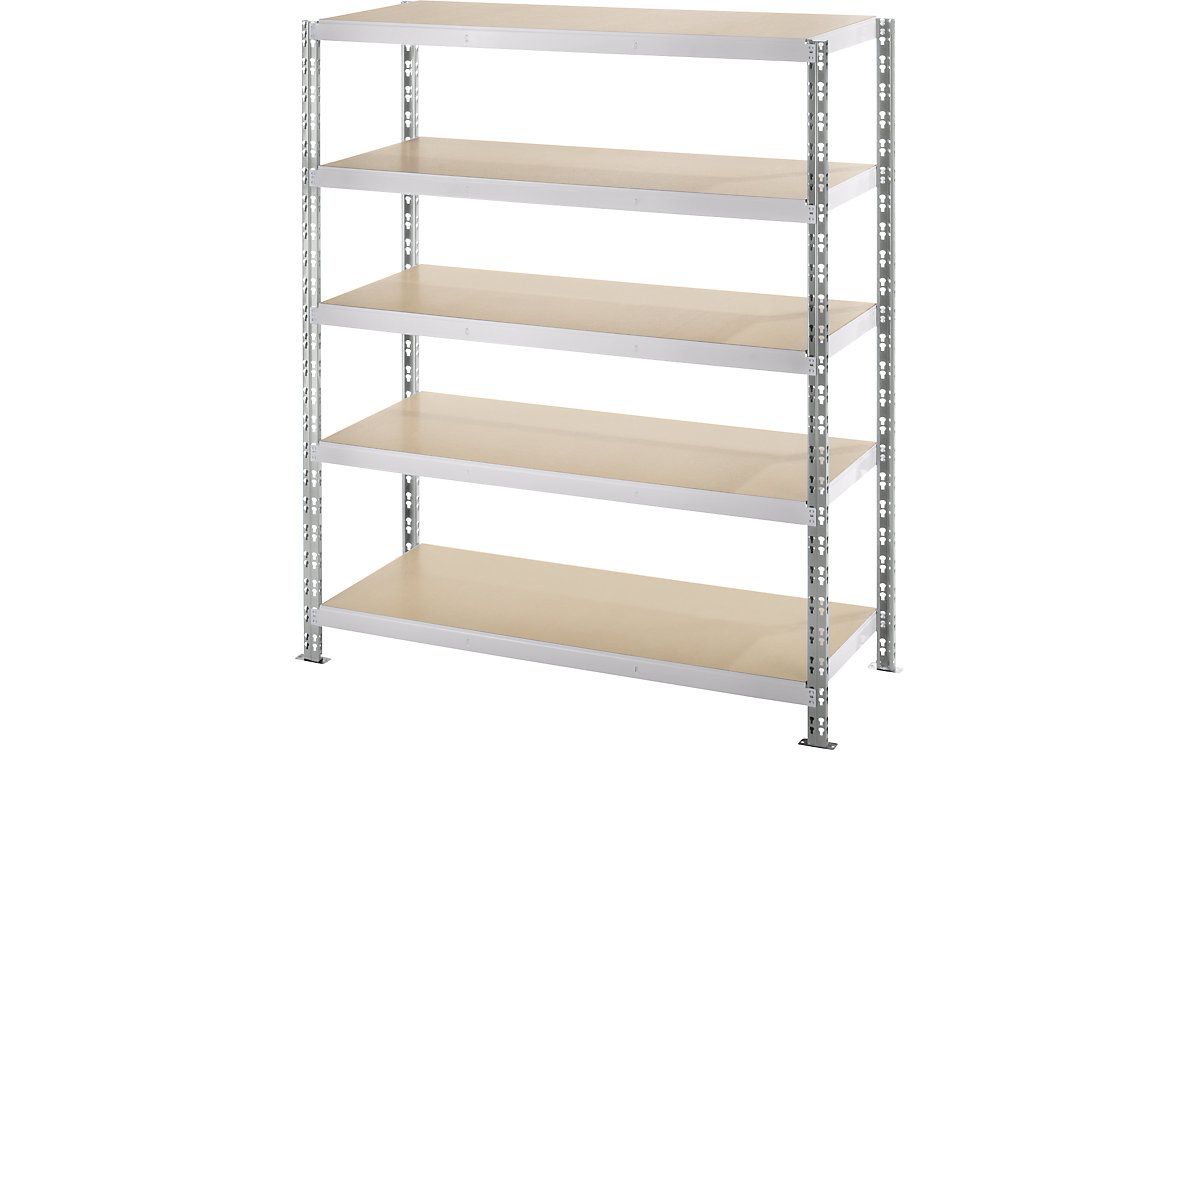 Wide span boltless shelf unit with moulded chipboard shelves, depth 700 mm, standard shelf unit, HxW 1820 x 1550 mm